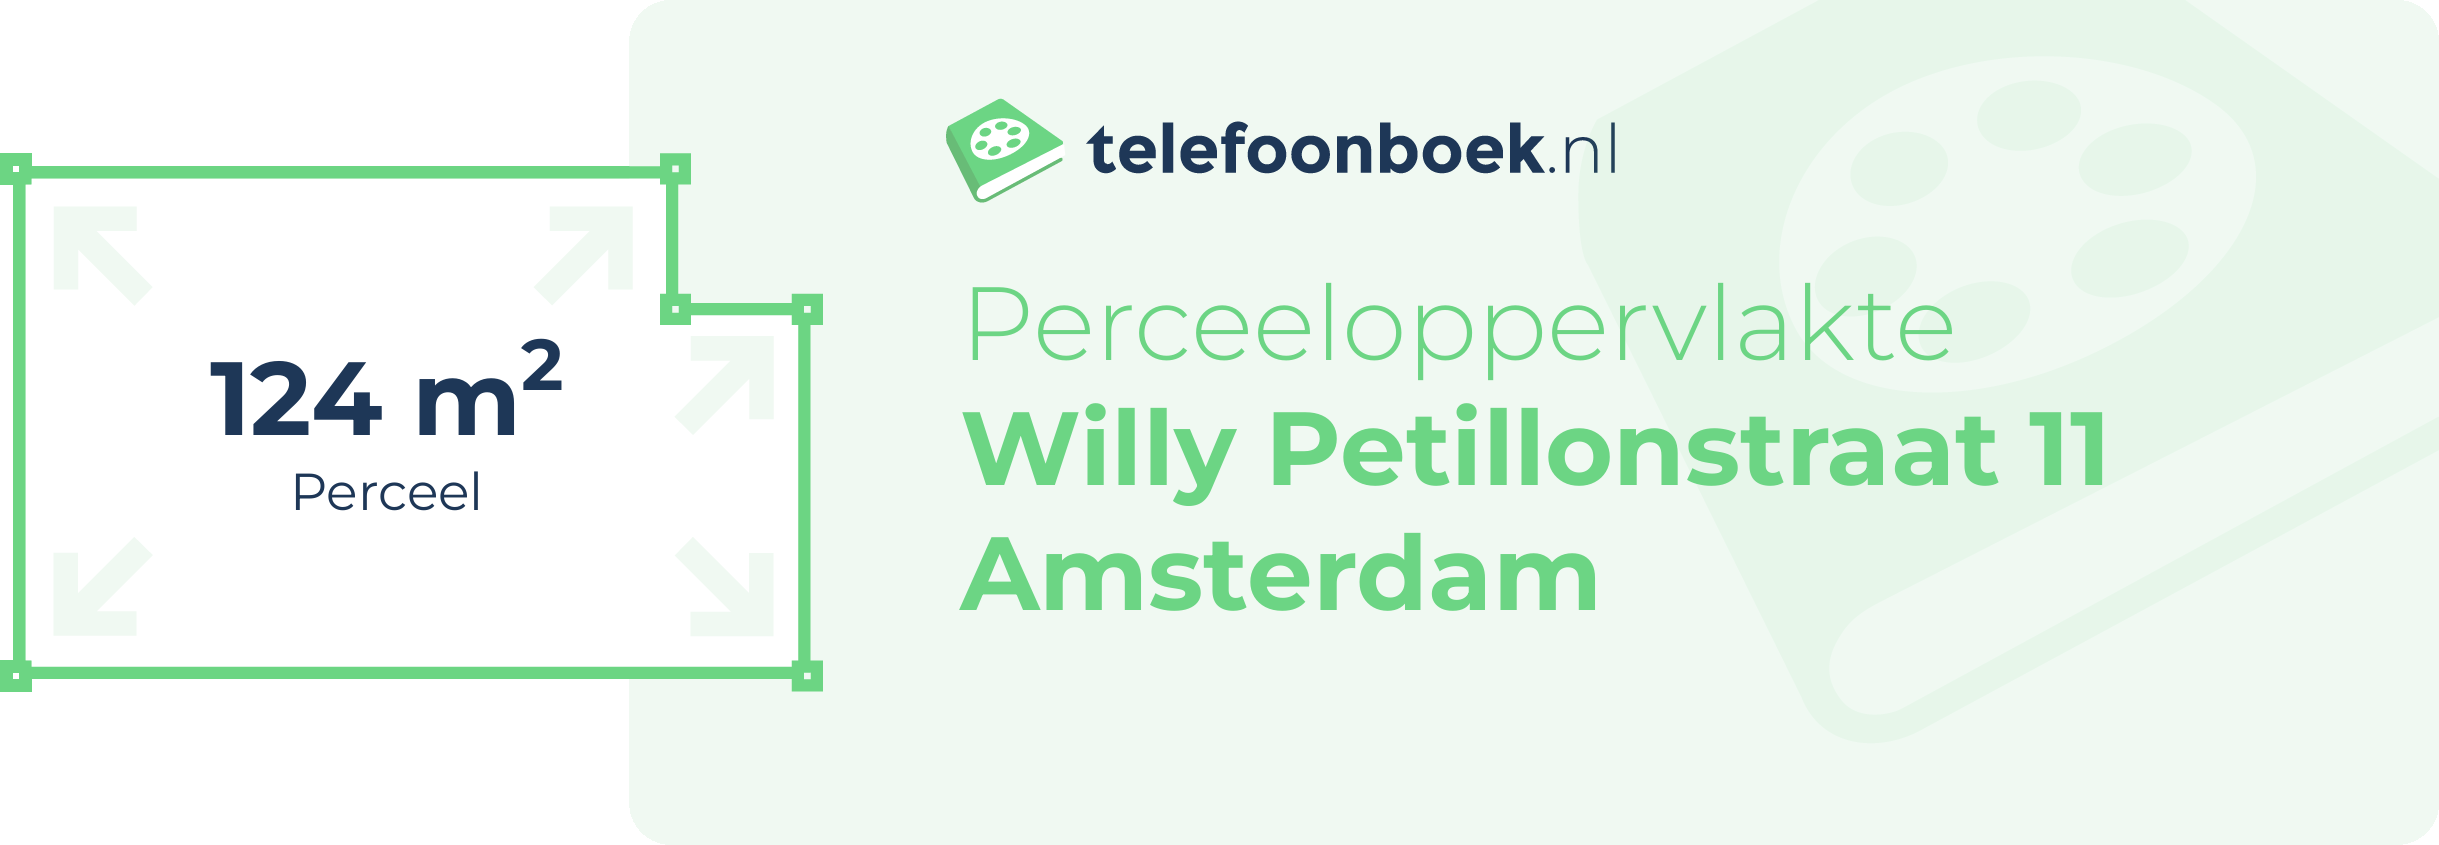 Perceeloppervlakte Willy Petillonstraat 11 Amsterdam